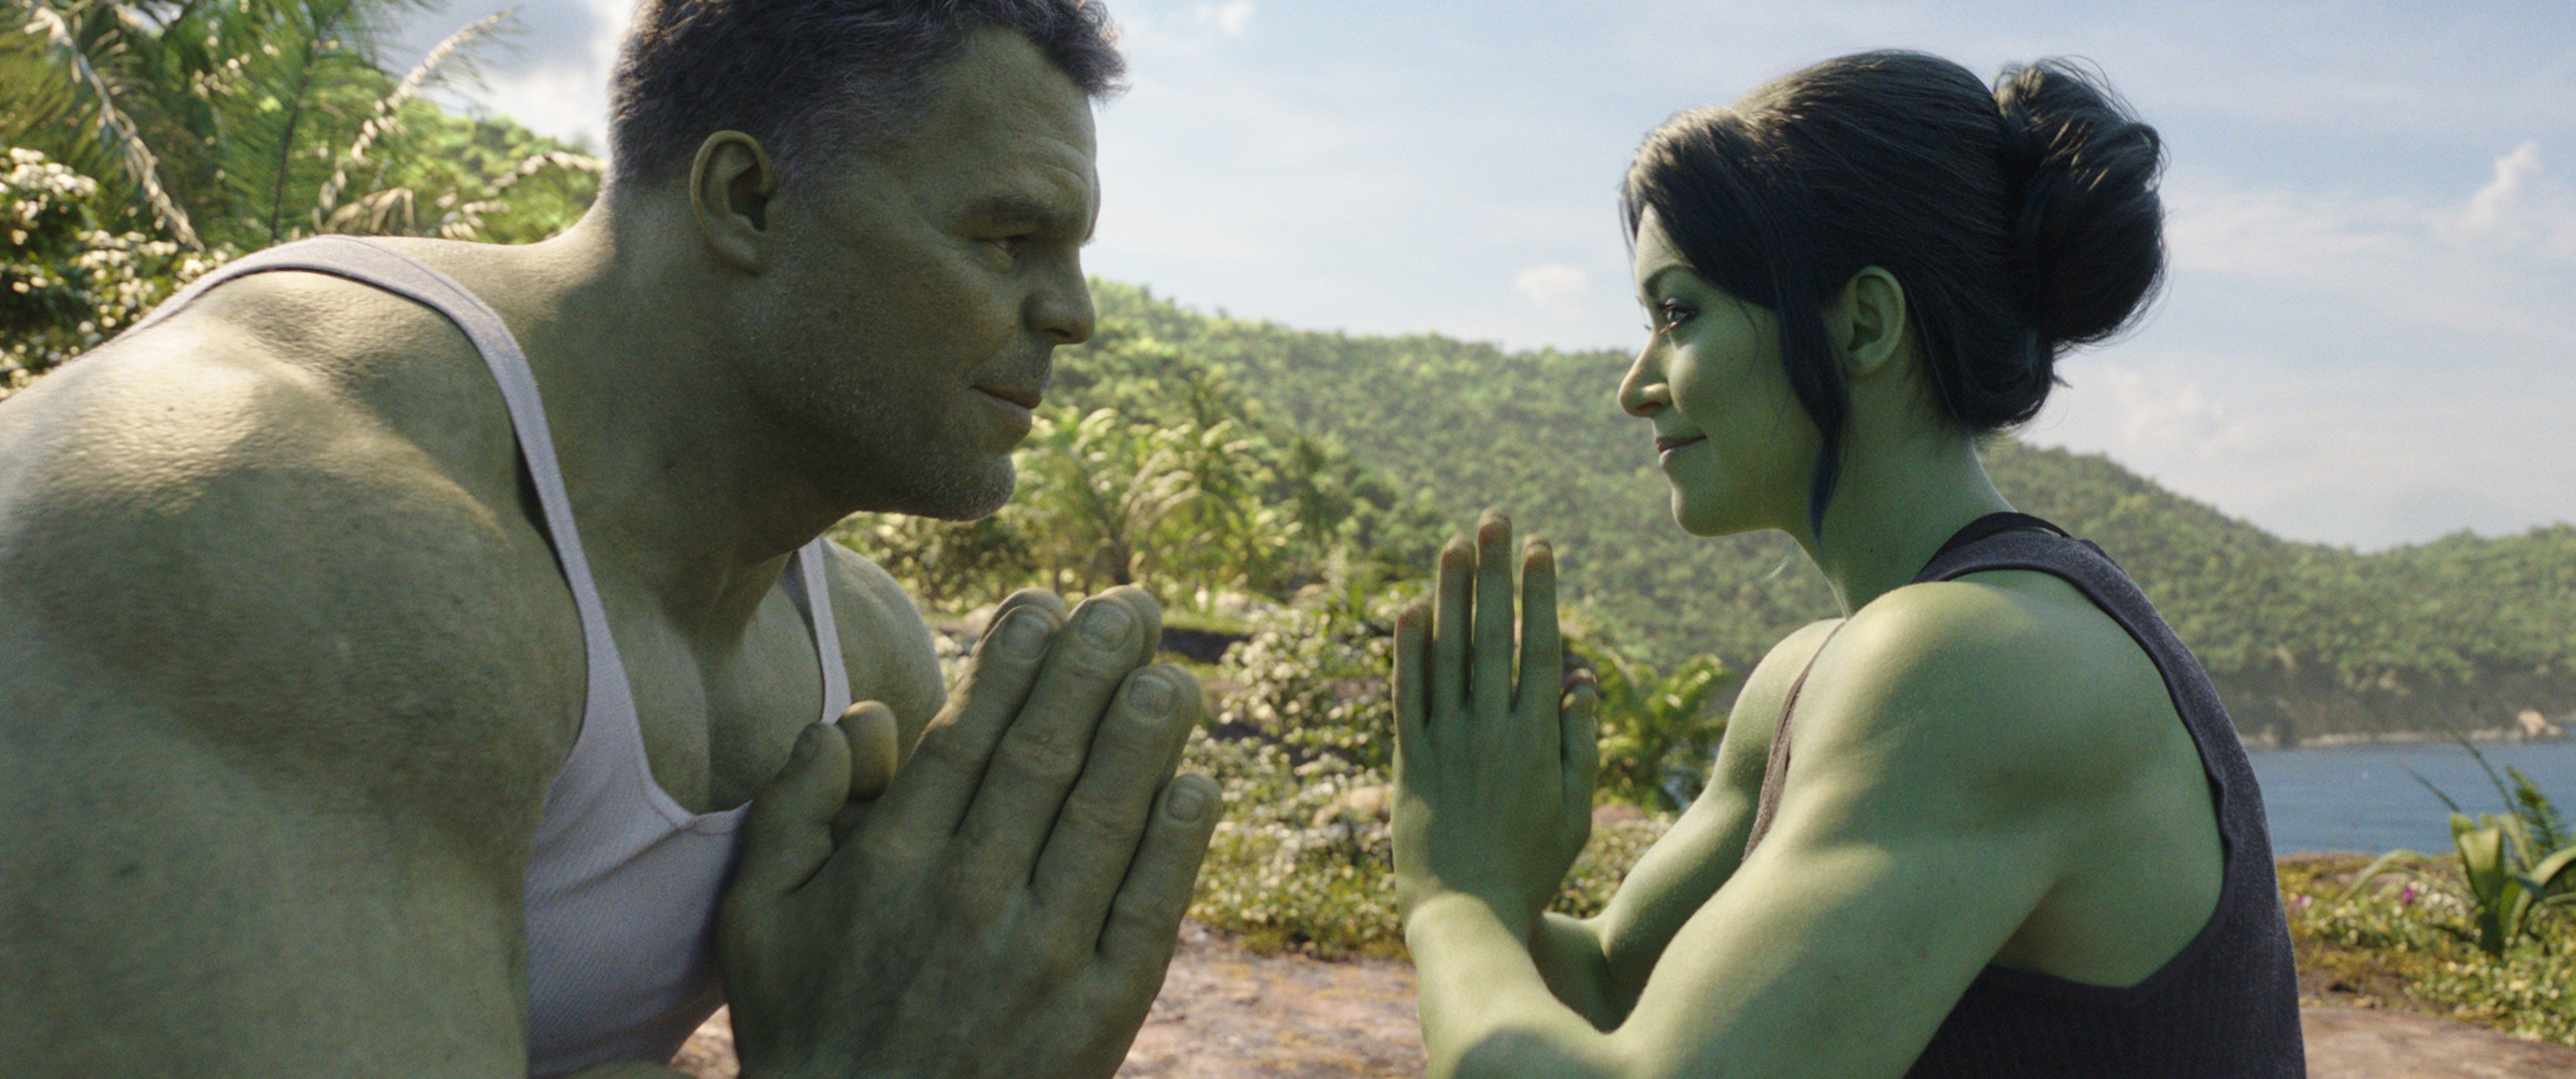 She-Hulk's Director says that Charlie Cox did his own stunts for She-Hulk